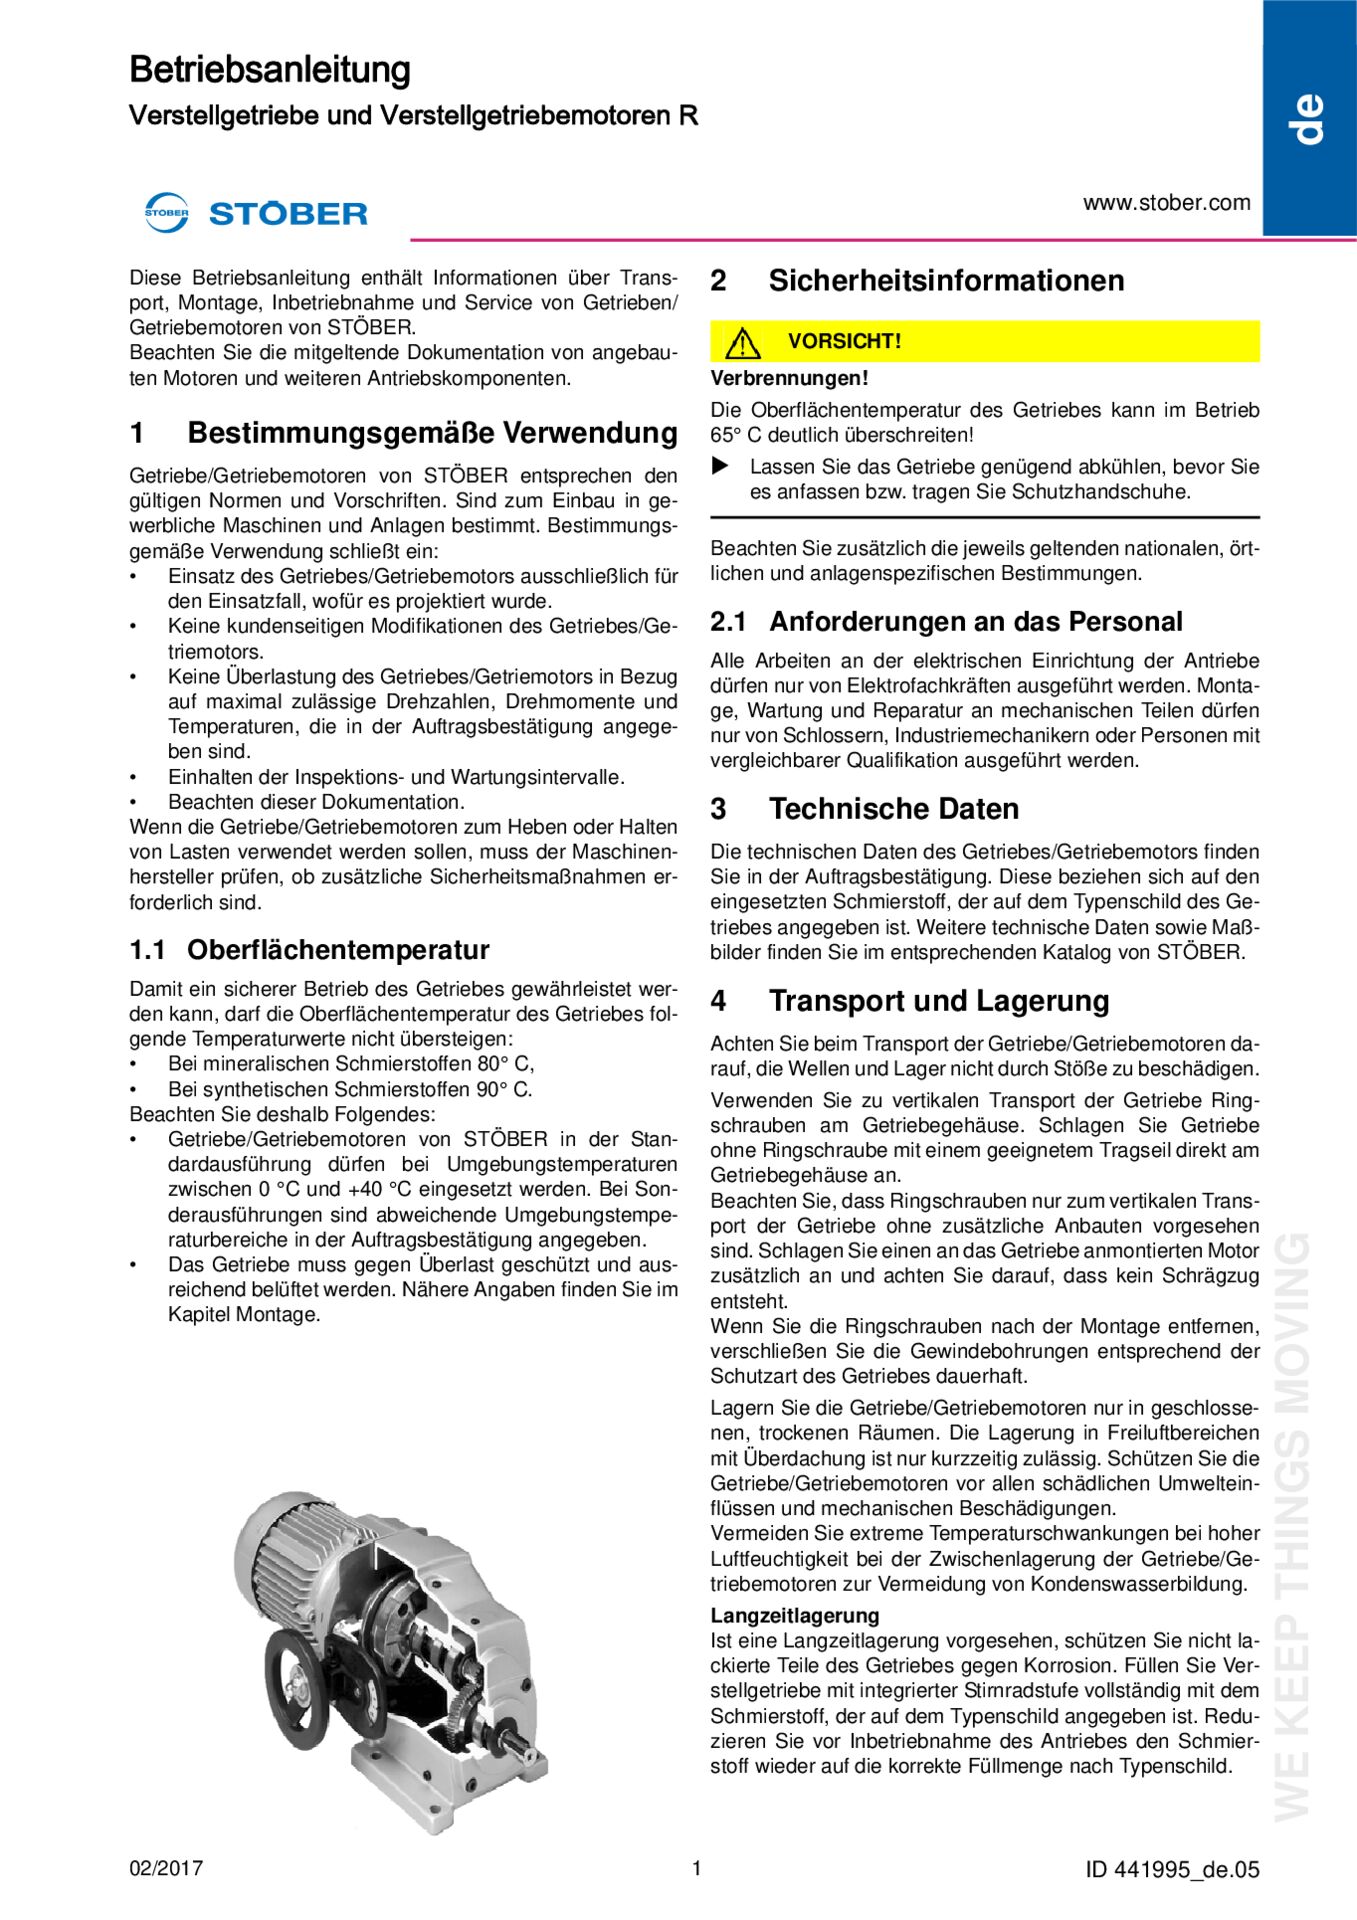 Instructions de service Variateurs et motovariateurs RBetriebsanleitung Verstellgetriebe und Verstellgetriebemotoren RIstruzioni per l''uso Riduttori e motoriduttori R